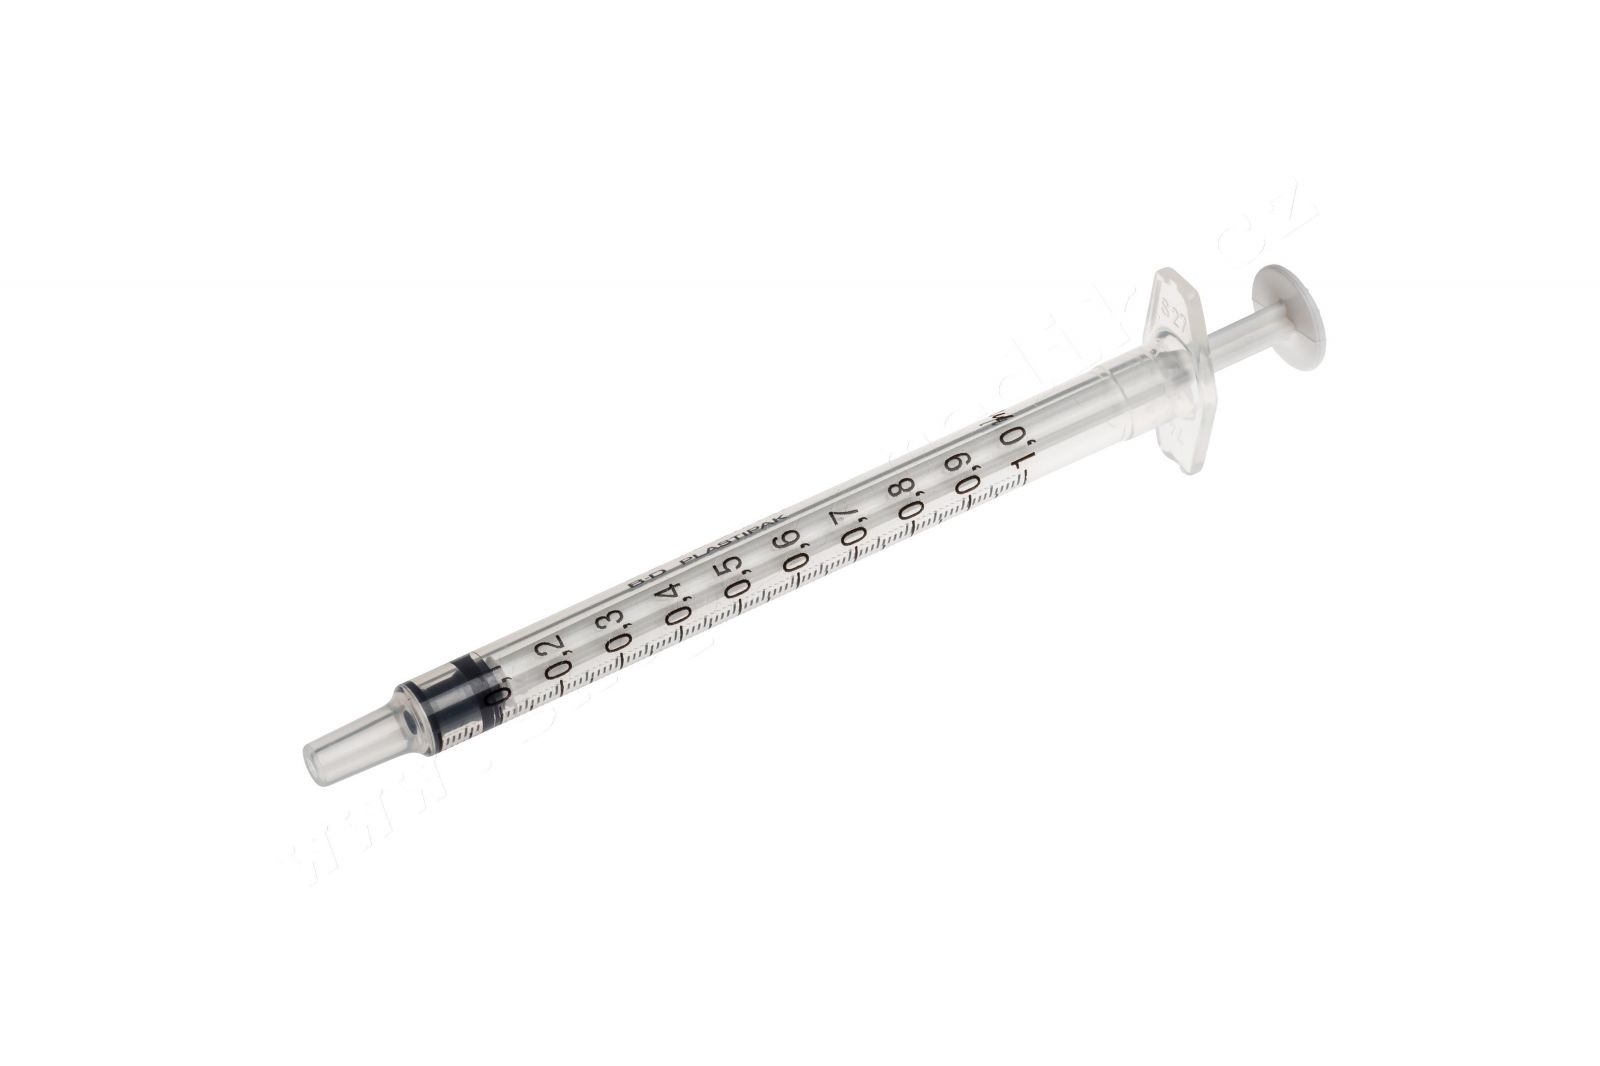 1 ml syringe plunger - 1pc